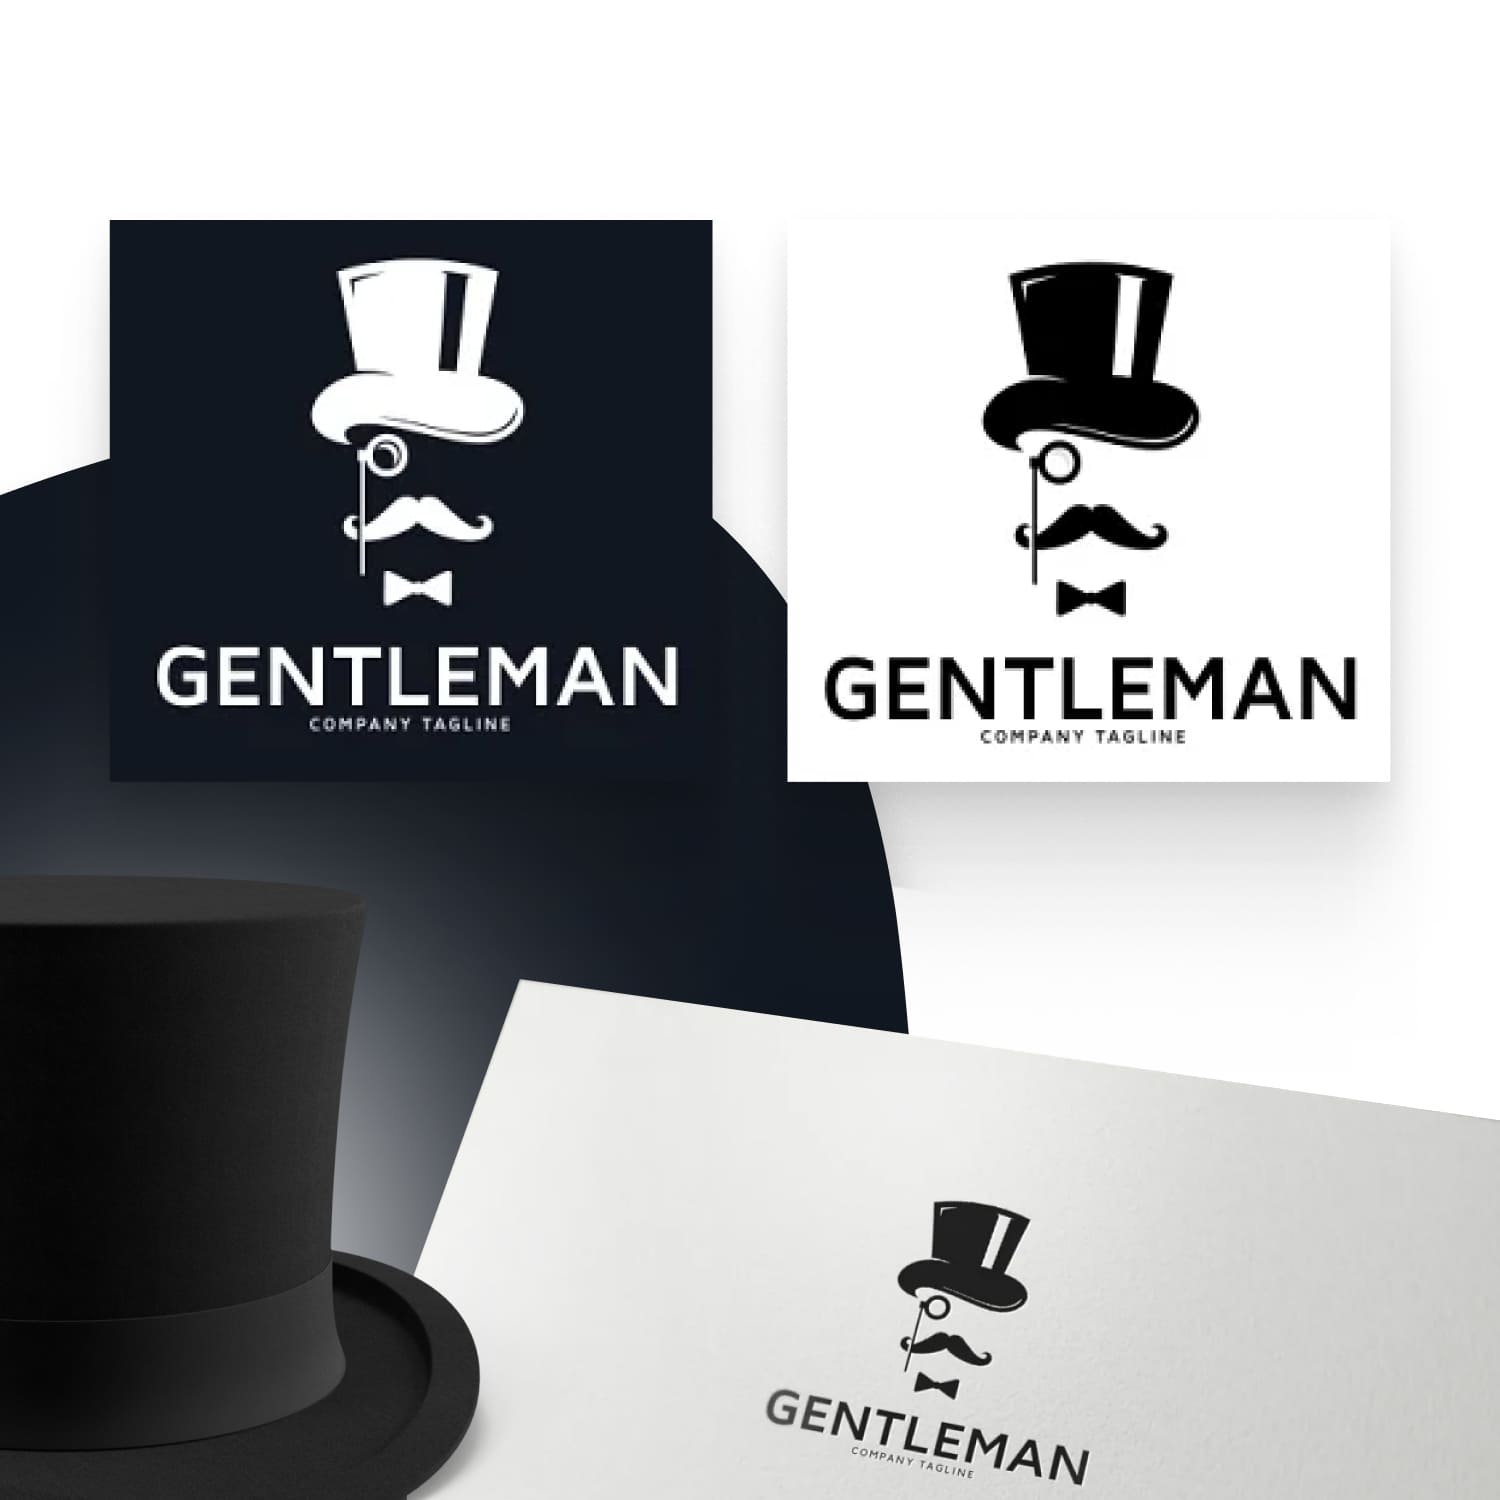 Gentleman - Hipster Logo Template cover.